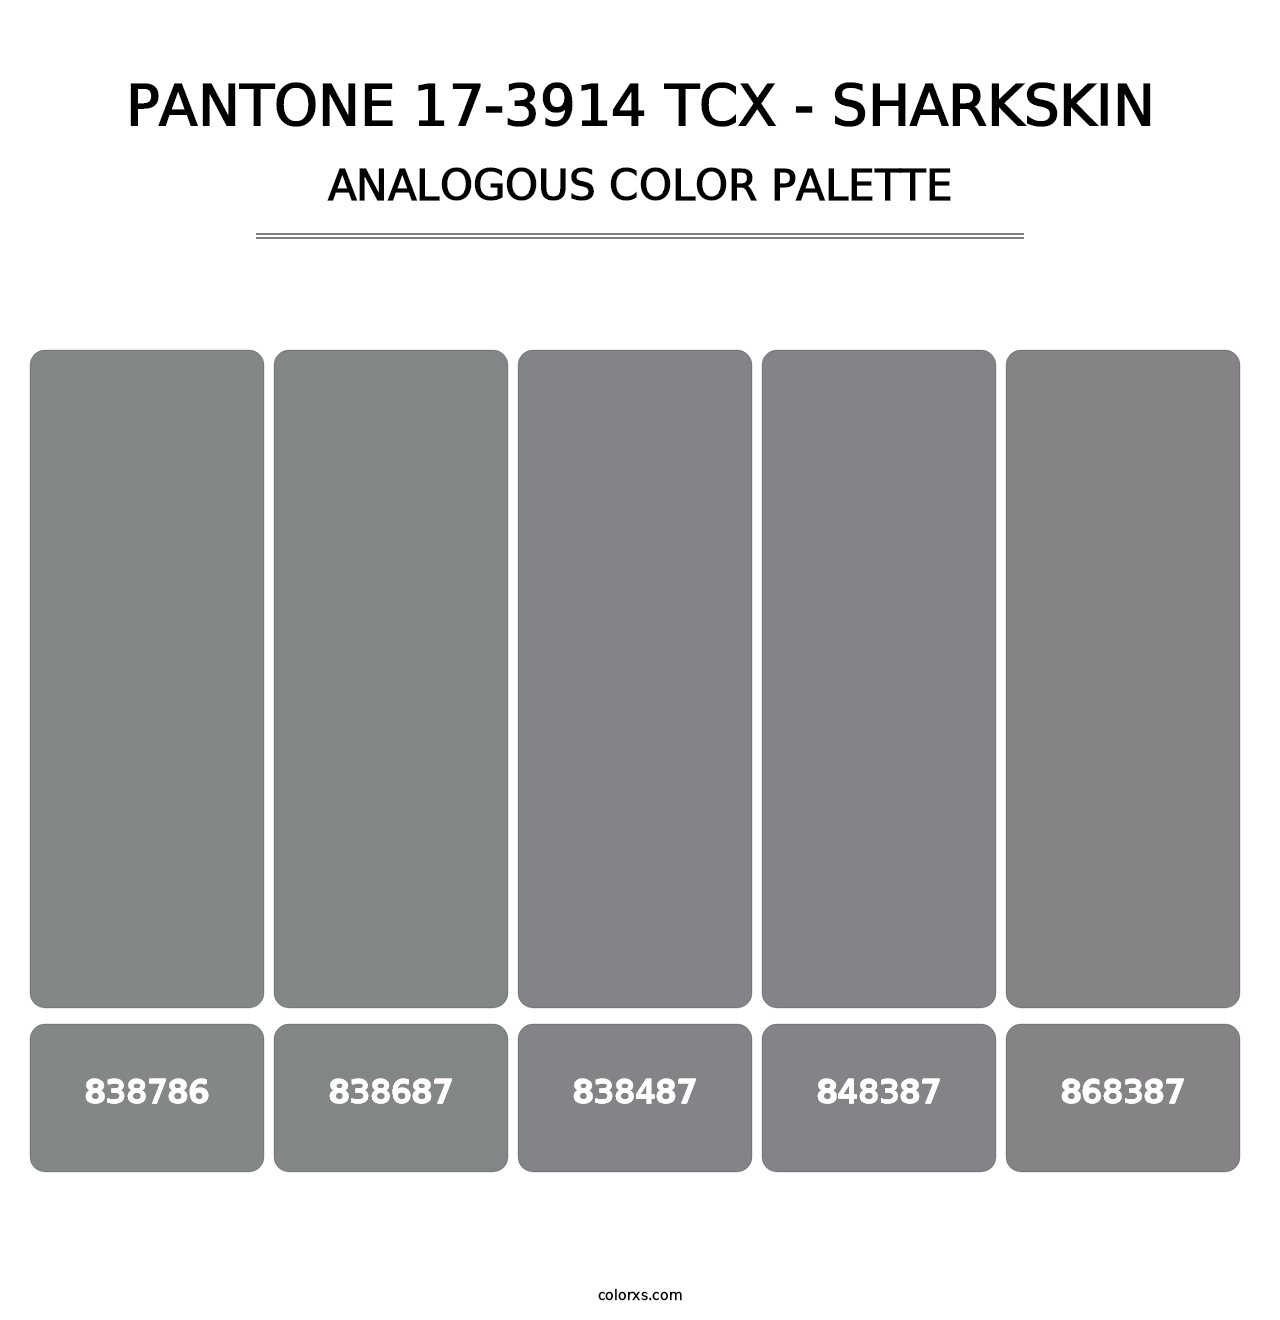 PANTONE 17-3914 TCX - Sharkskin - Analogous Color Palette